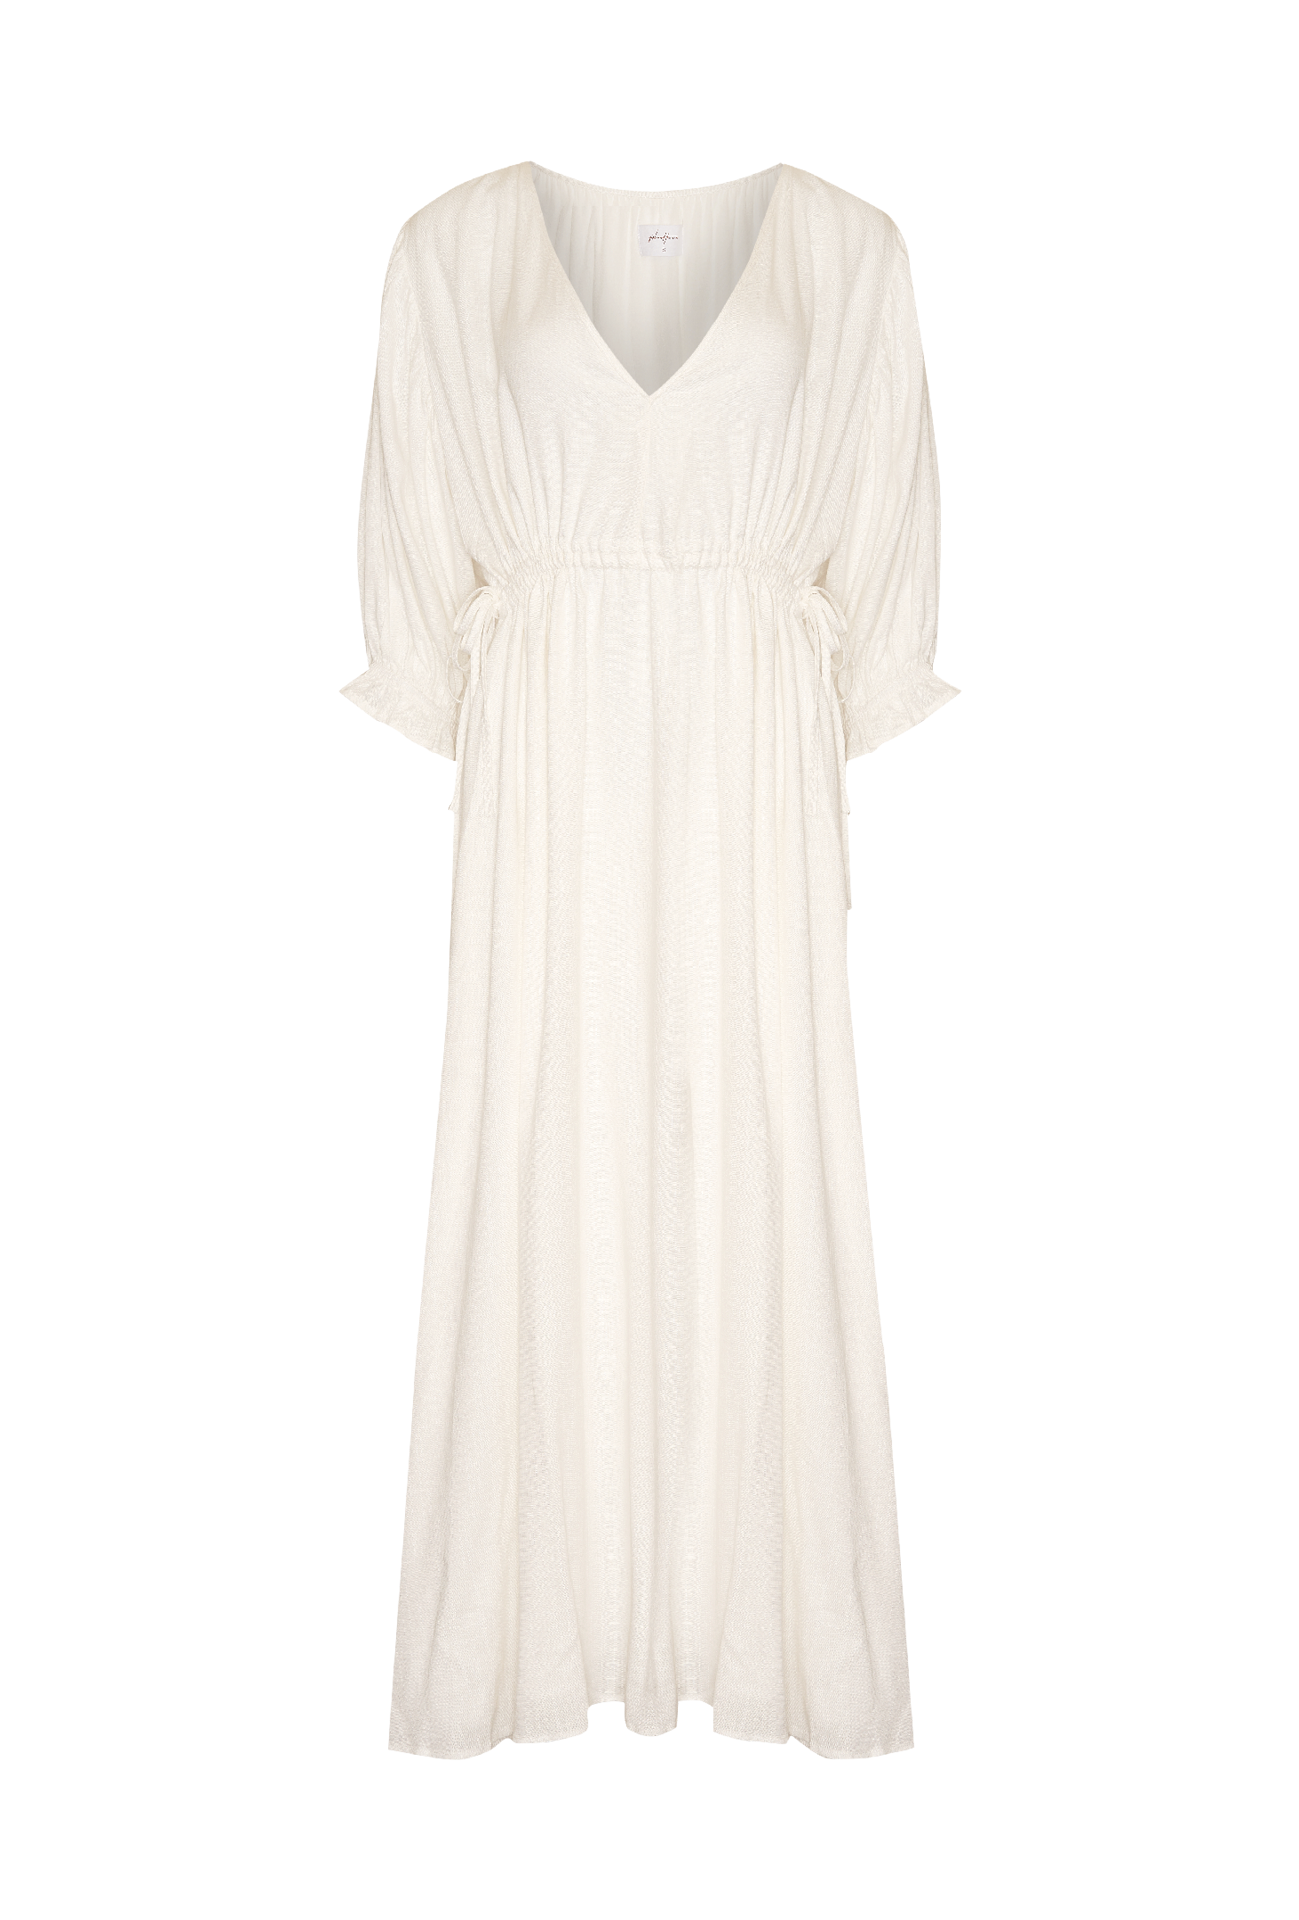 FEBRUARY MAXI DRESS - WHITE